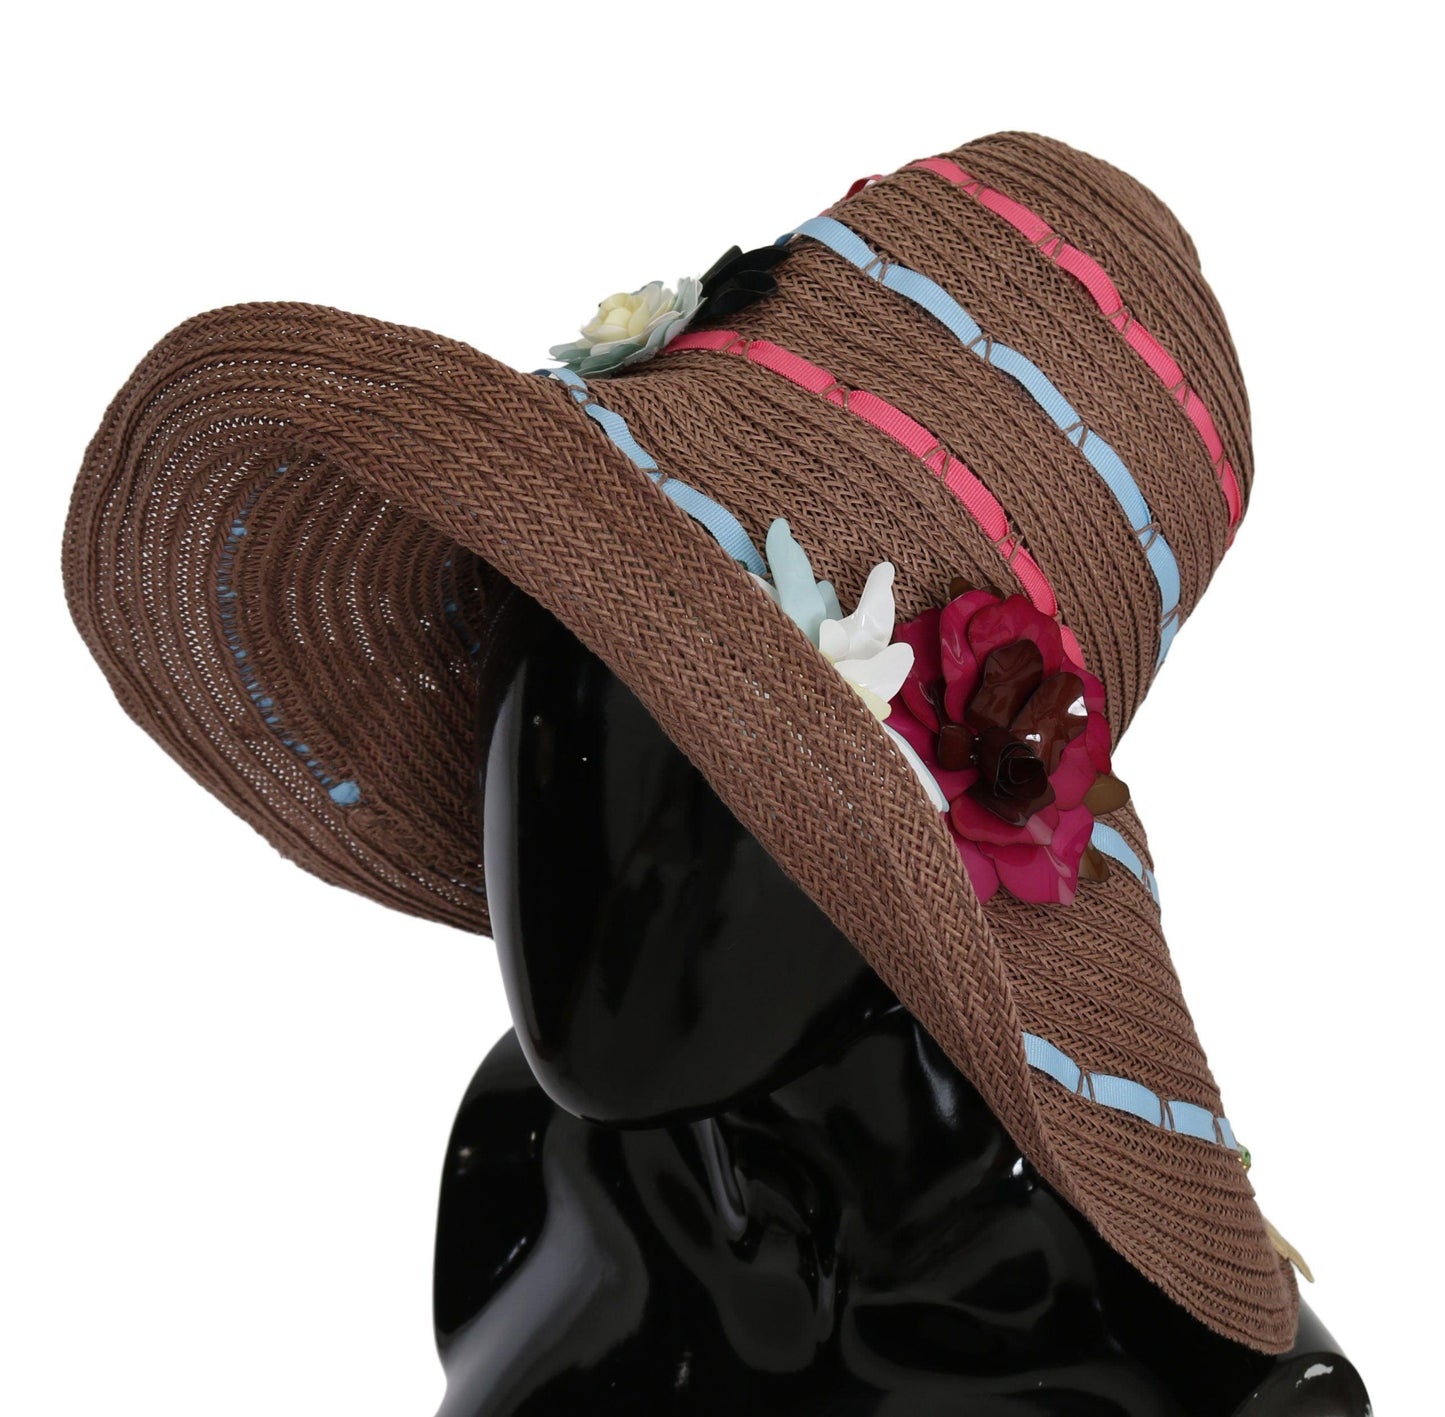 Dolce & Gabbana Elegant Floppy Straw Hat with Floral Accents - PER.FASHION